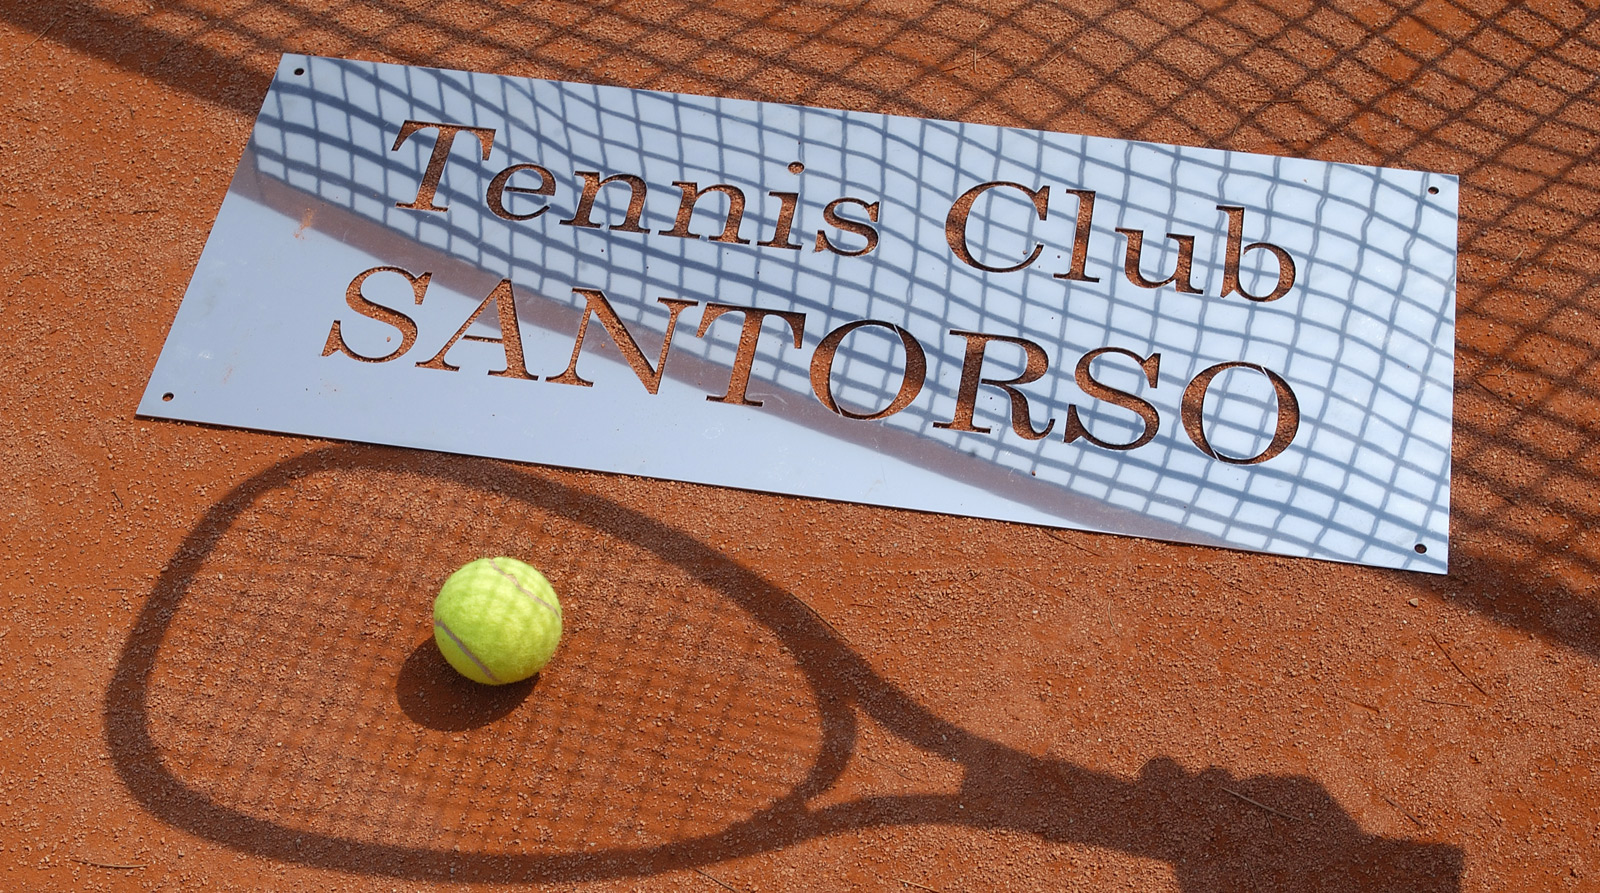 Tennis Club Santorso